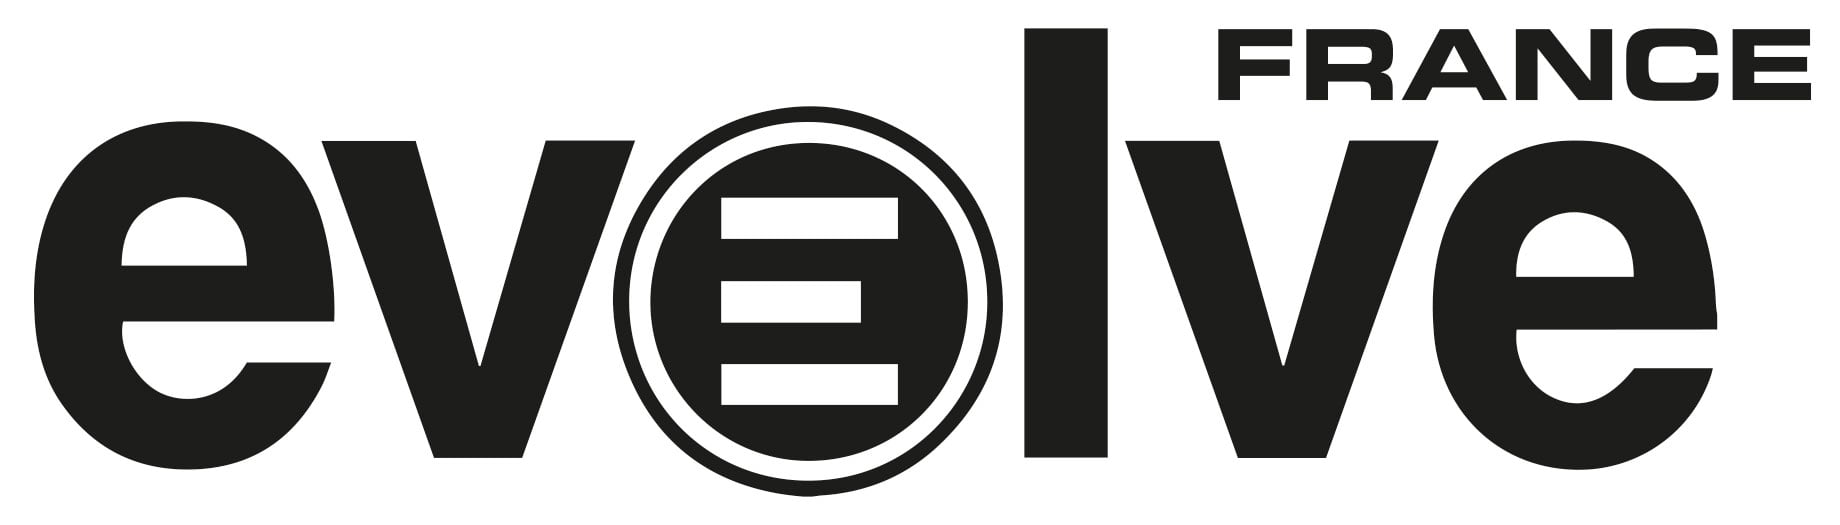 Logo Ride Evolve France